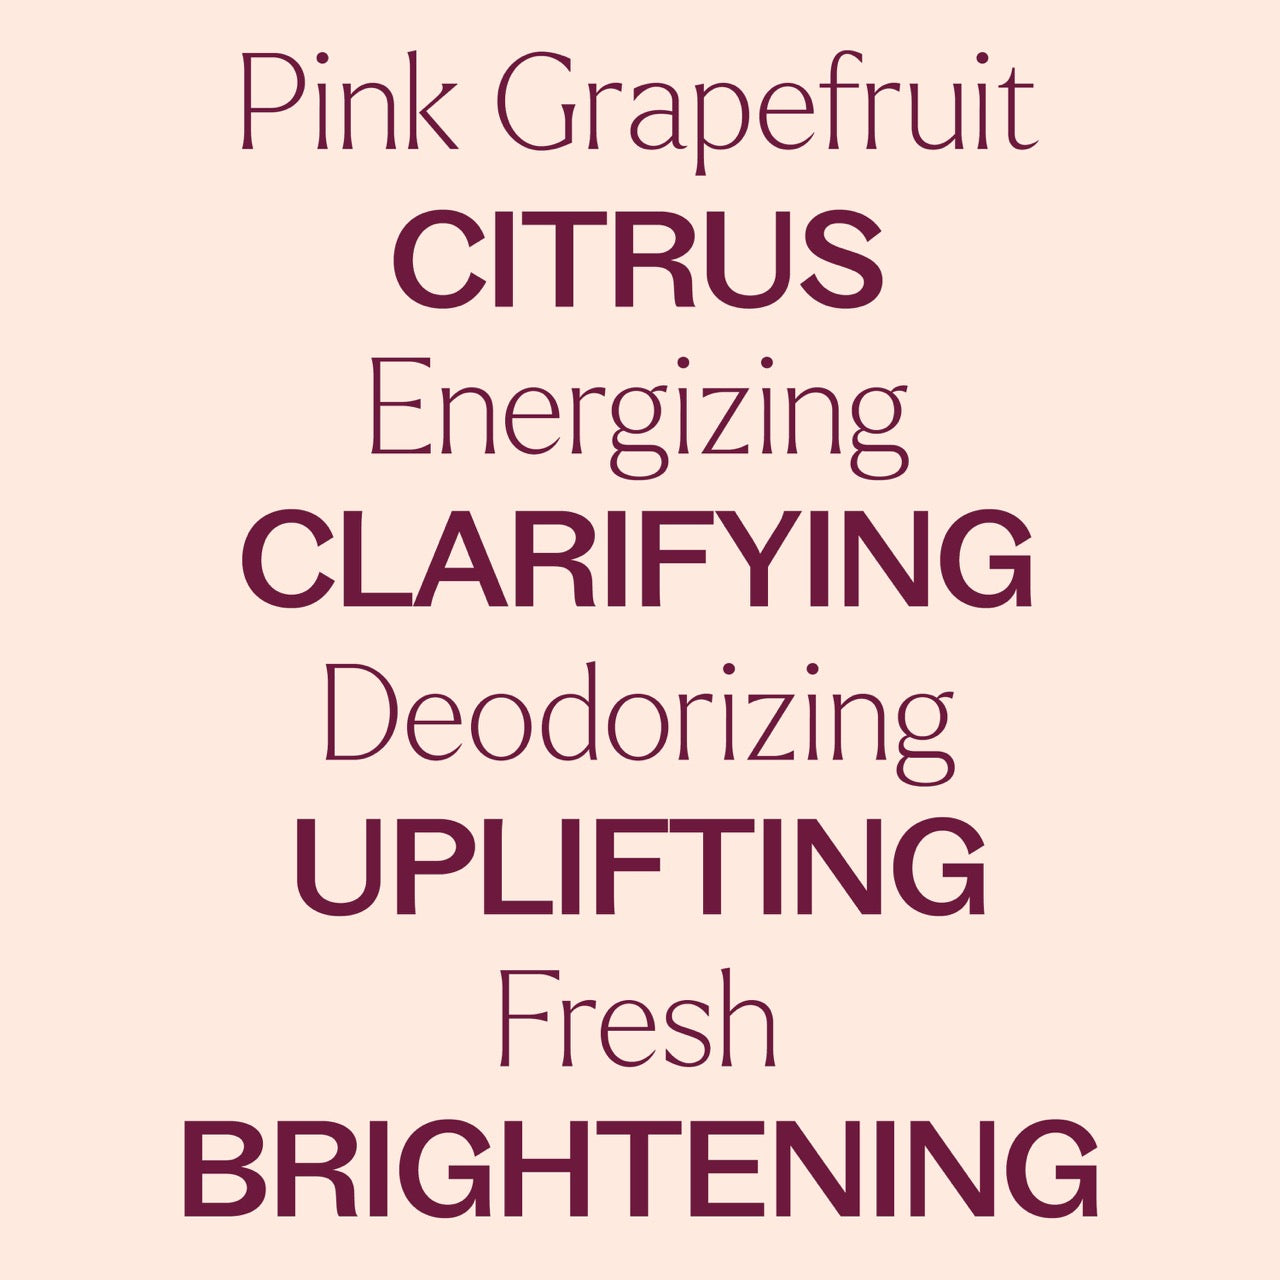 Pink Grapefruit Essential Oil key features: citrus, energizing, clarifying, deodorizing, uplifting, fresh, brightening